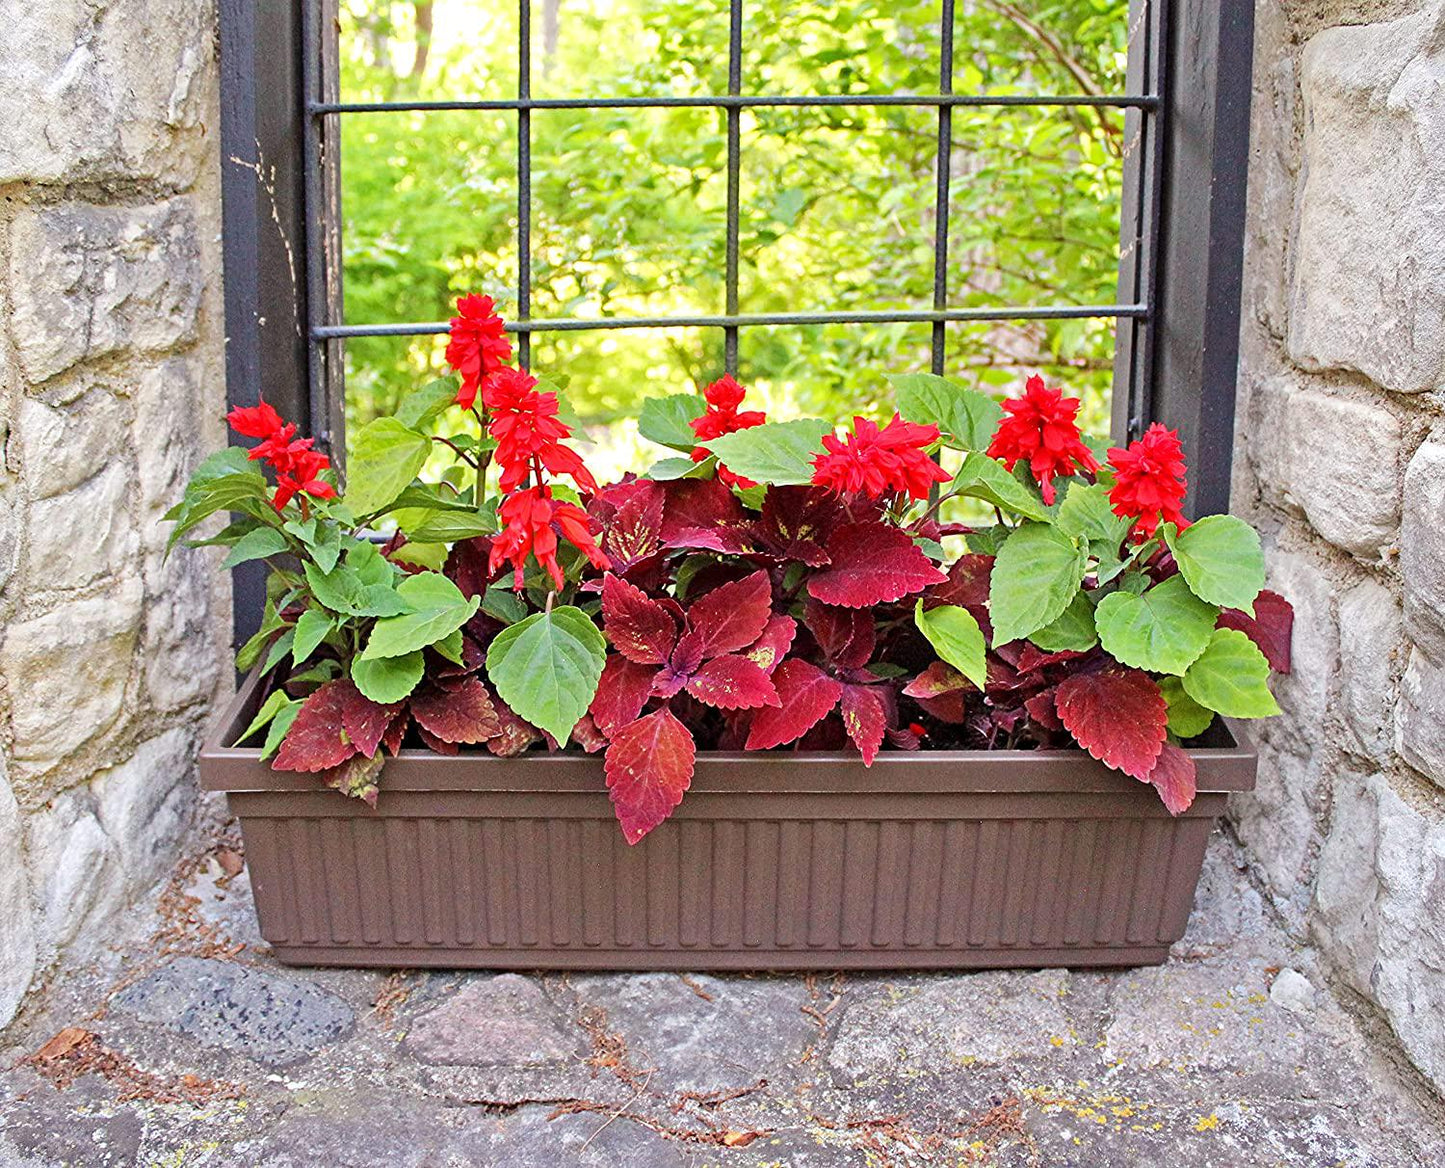 The HC Companies 30 Inch Venetian Rectangular Window Planter Box - Lightweight Plastic Indoor Outdoor Plant Pot with Drainage for Windowsill, Herbs, Flowers, Chocolate